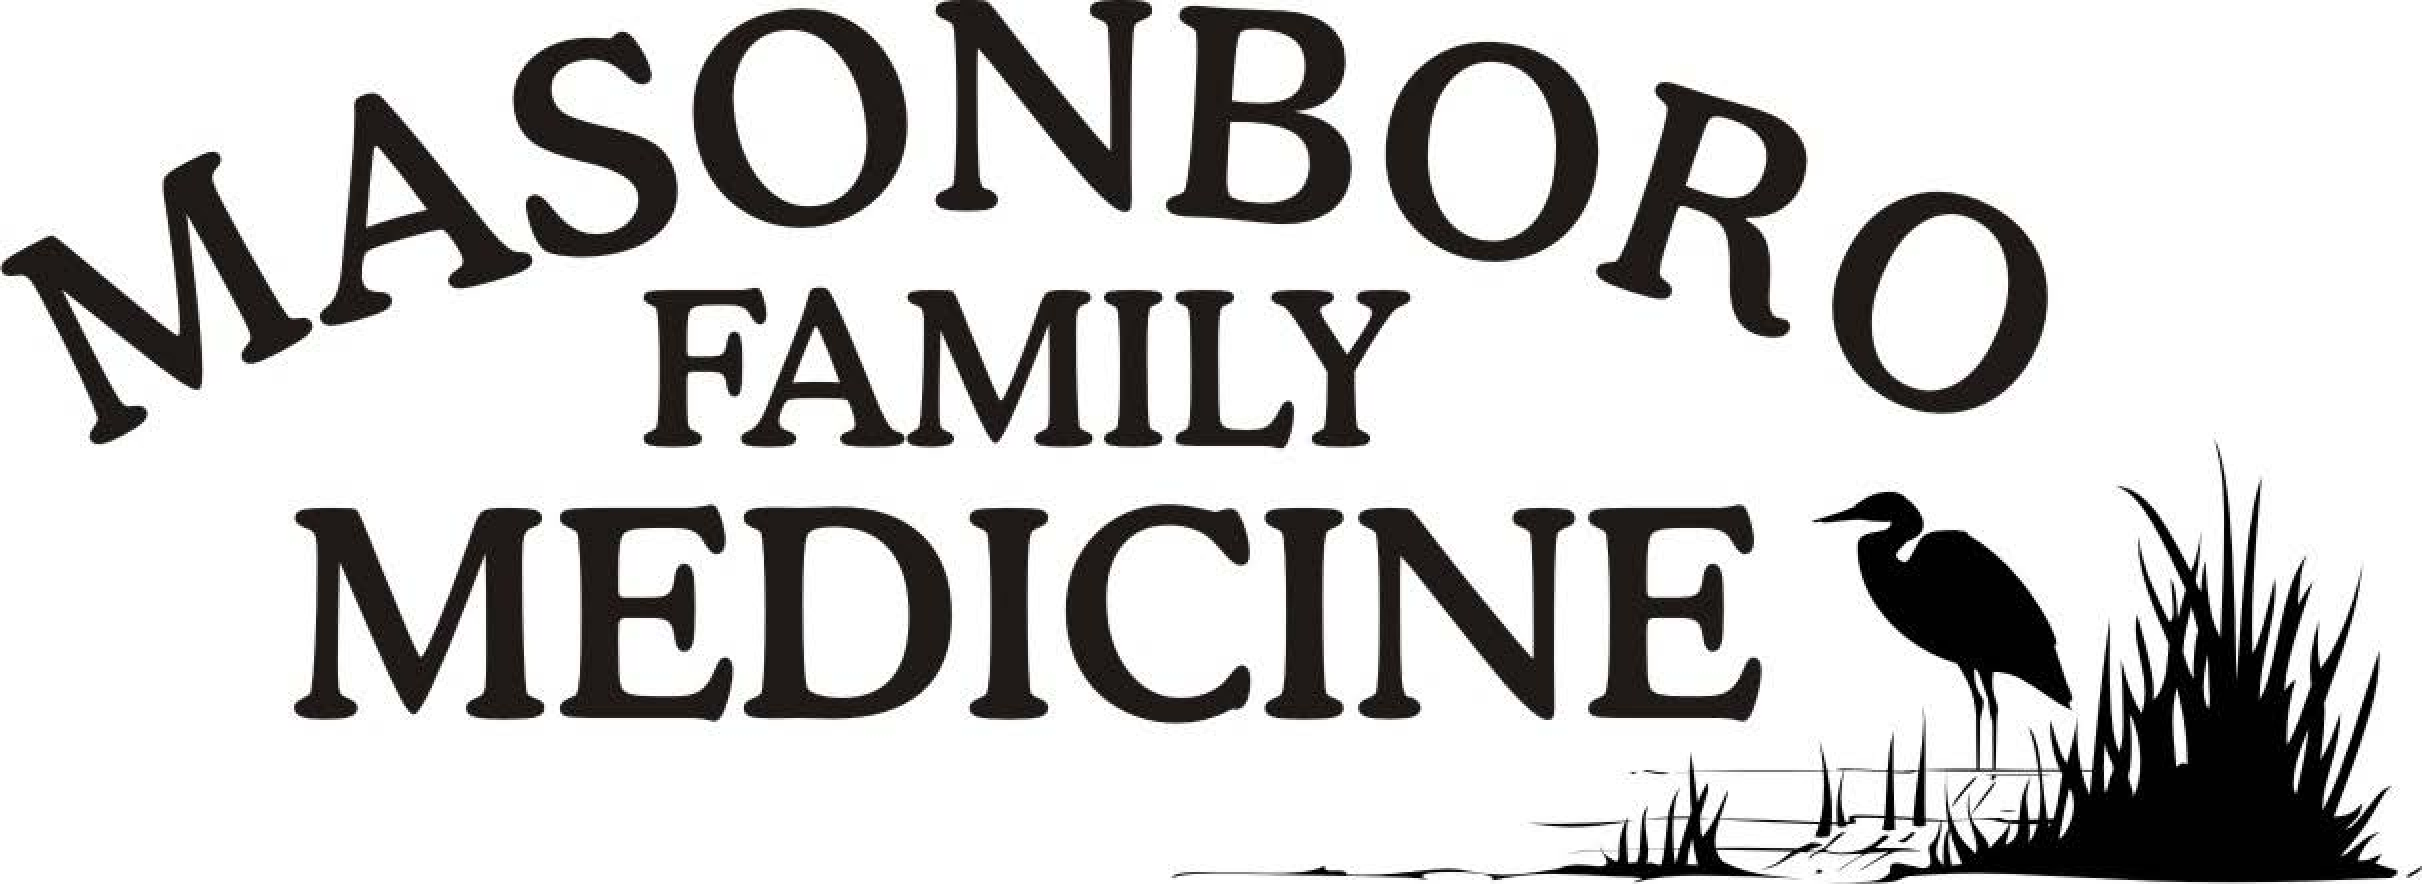 Image result for masonboro family medicine wilmington